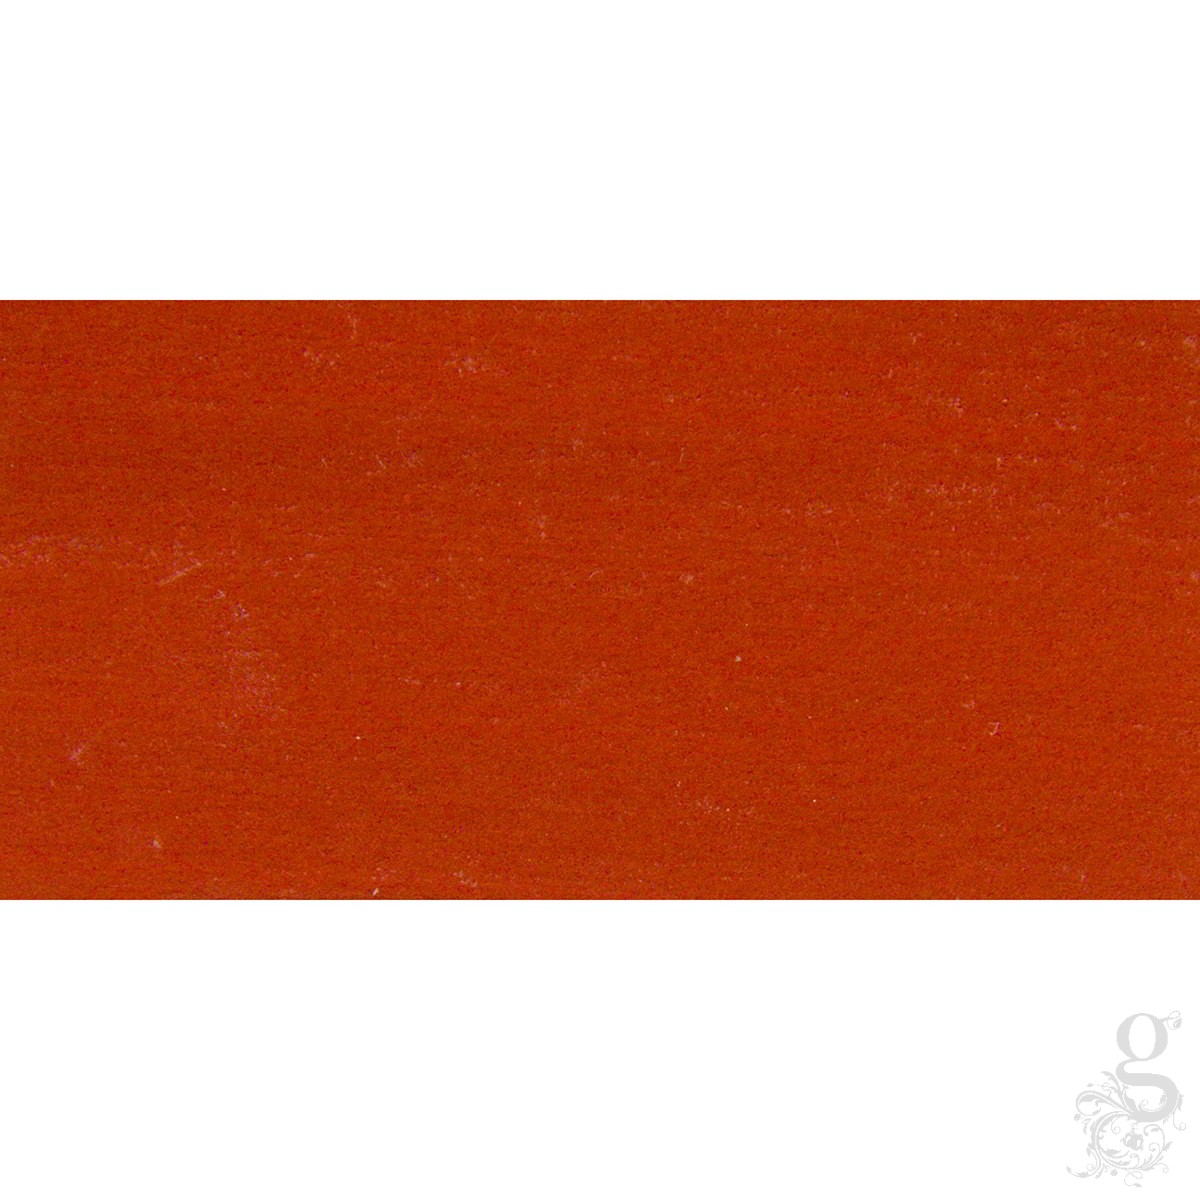 Dry Pigments - Venetian Red - 500g